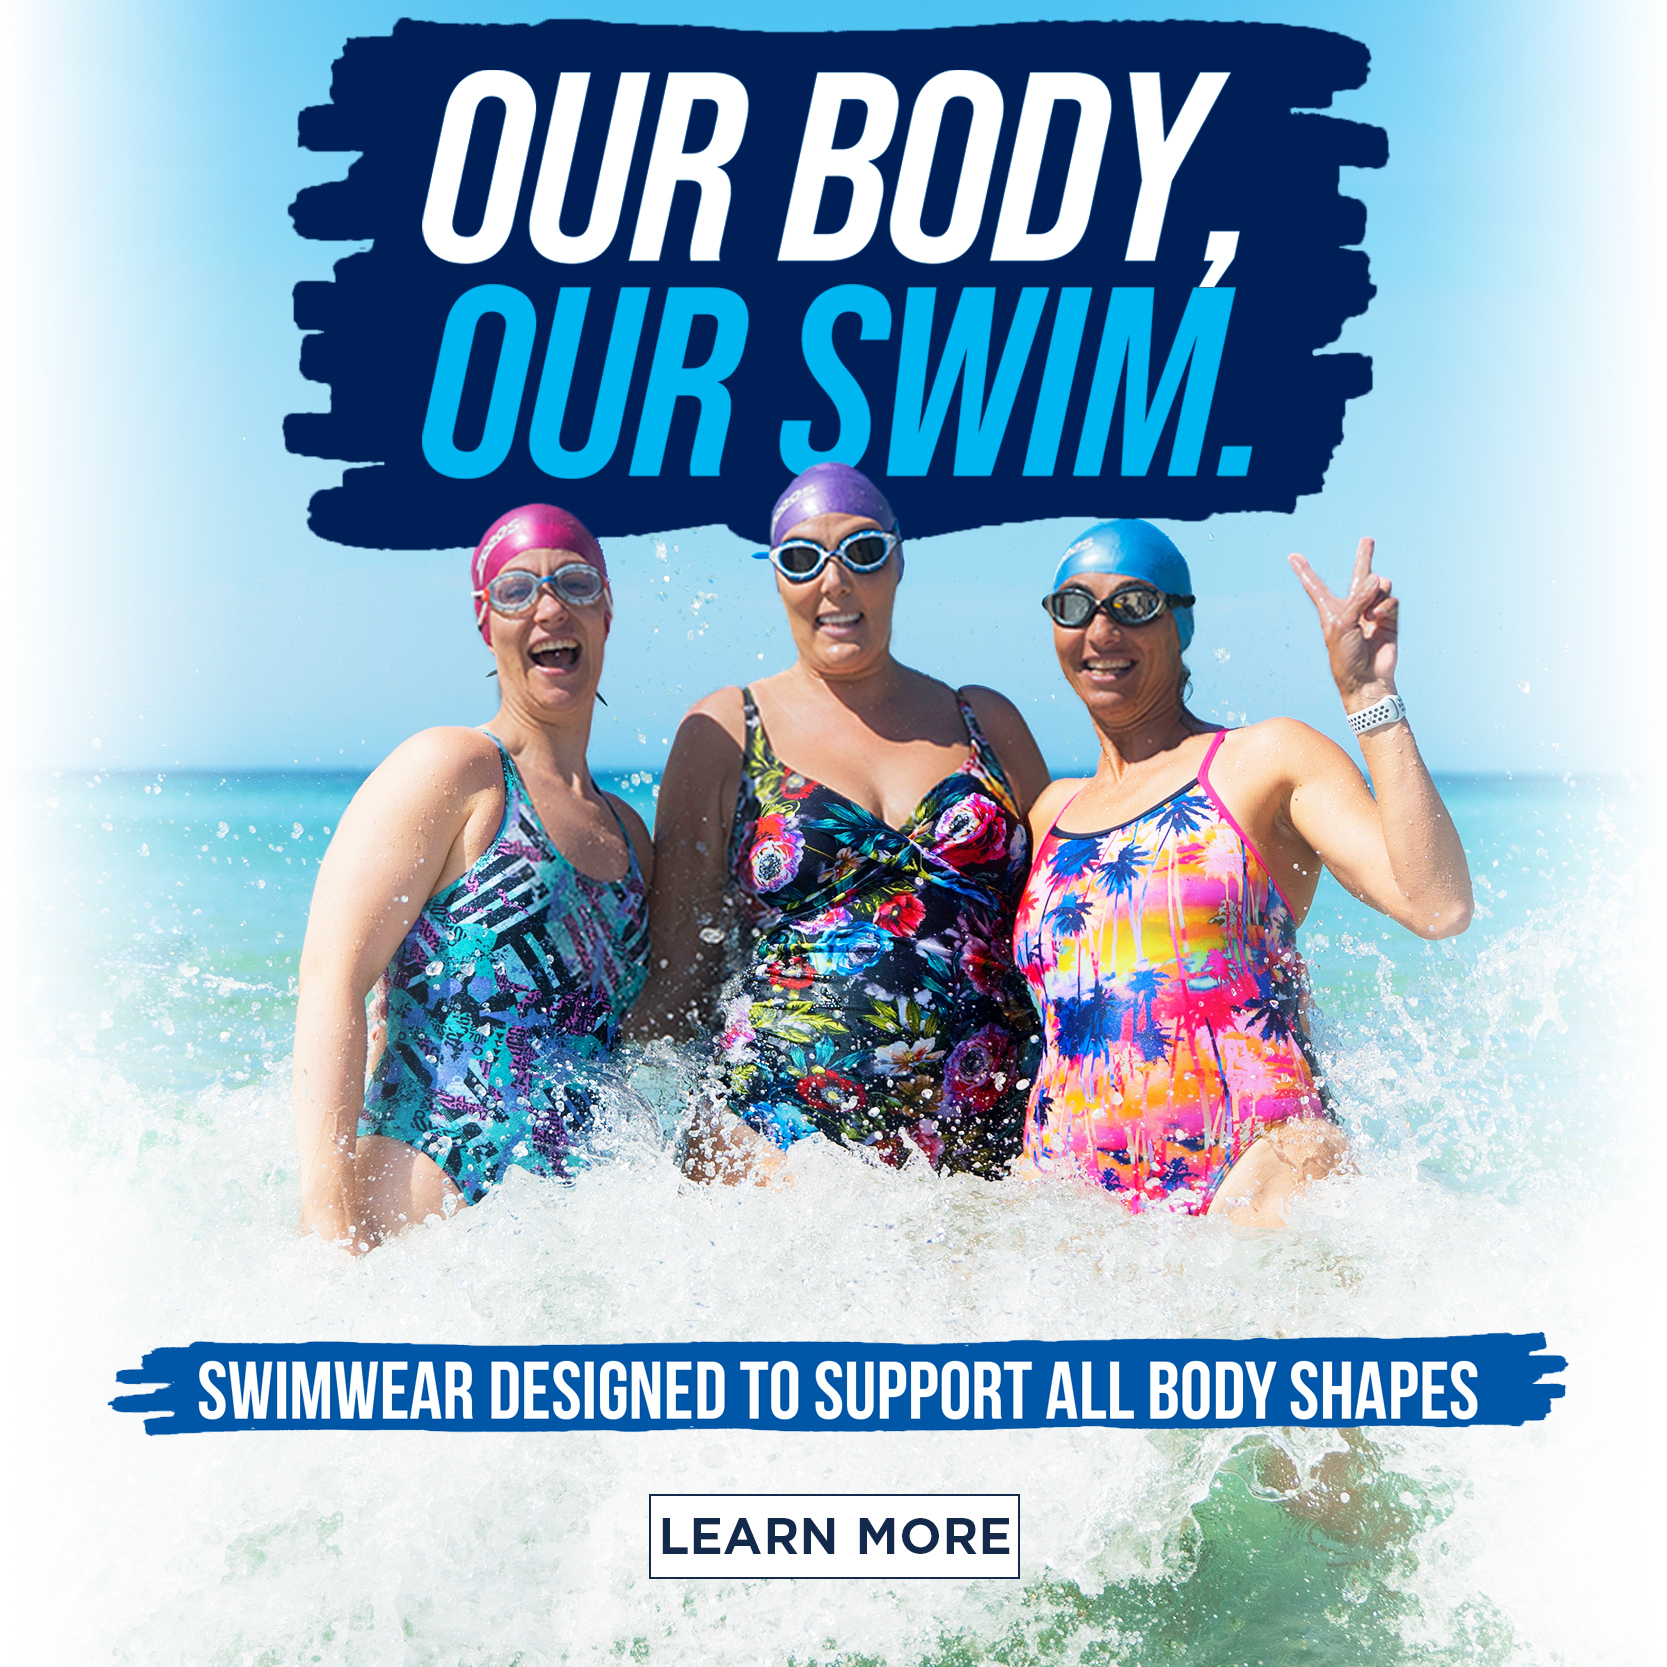 Our Body Our Swim